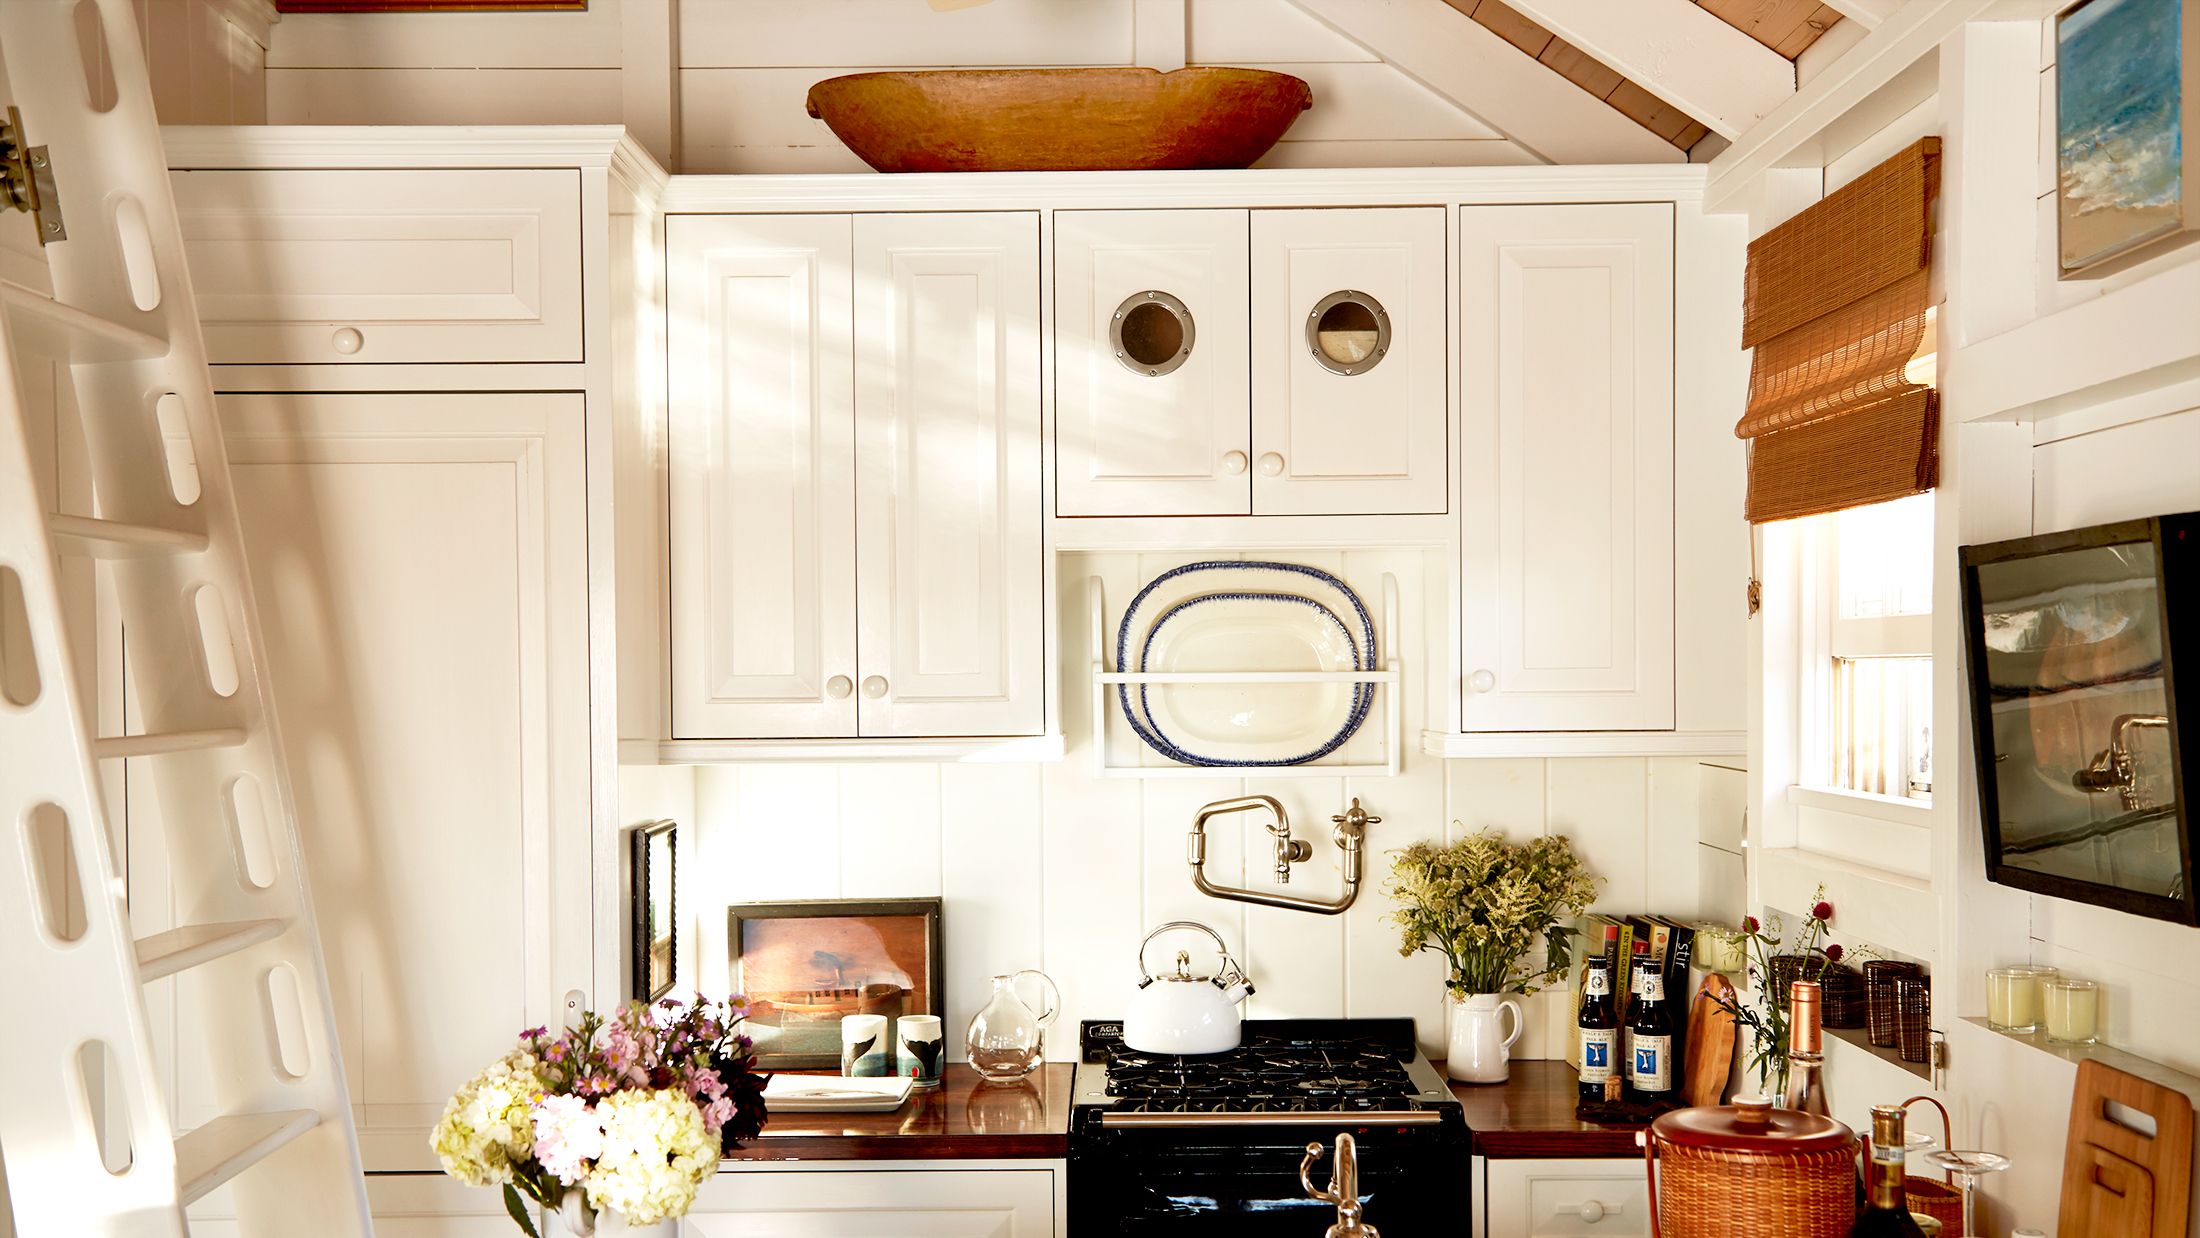 white kitchen renovation ideas